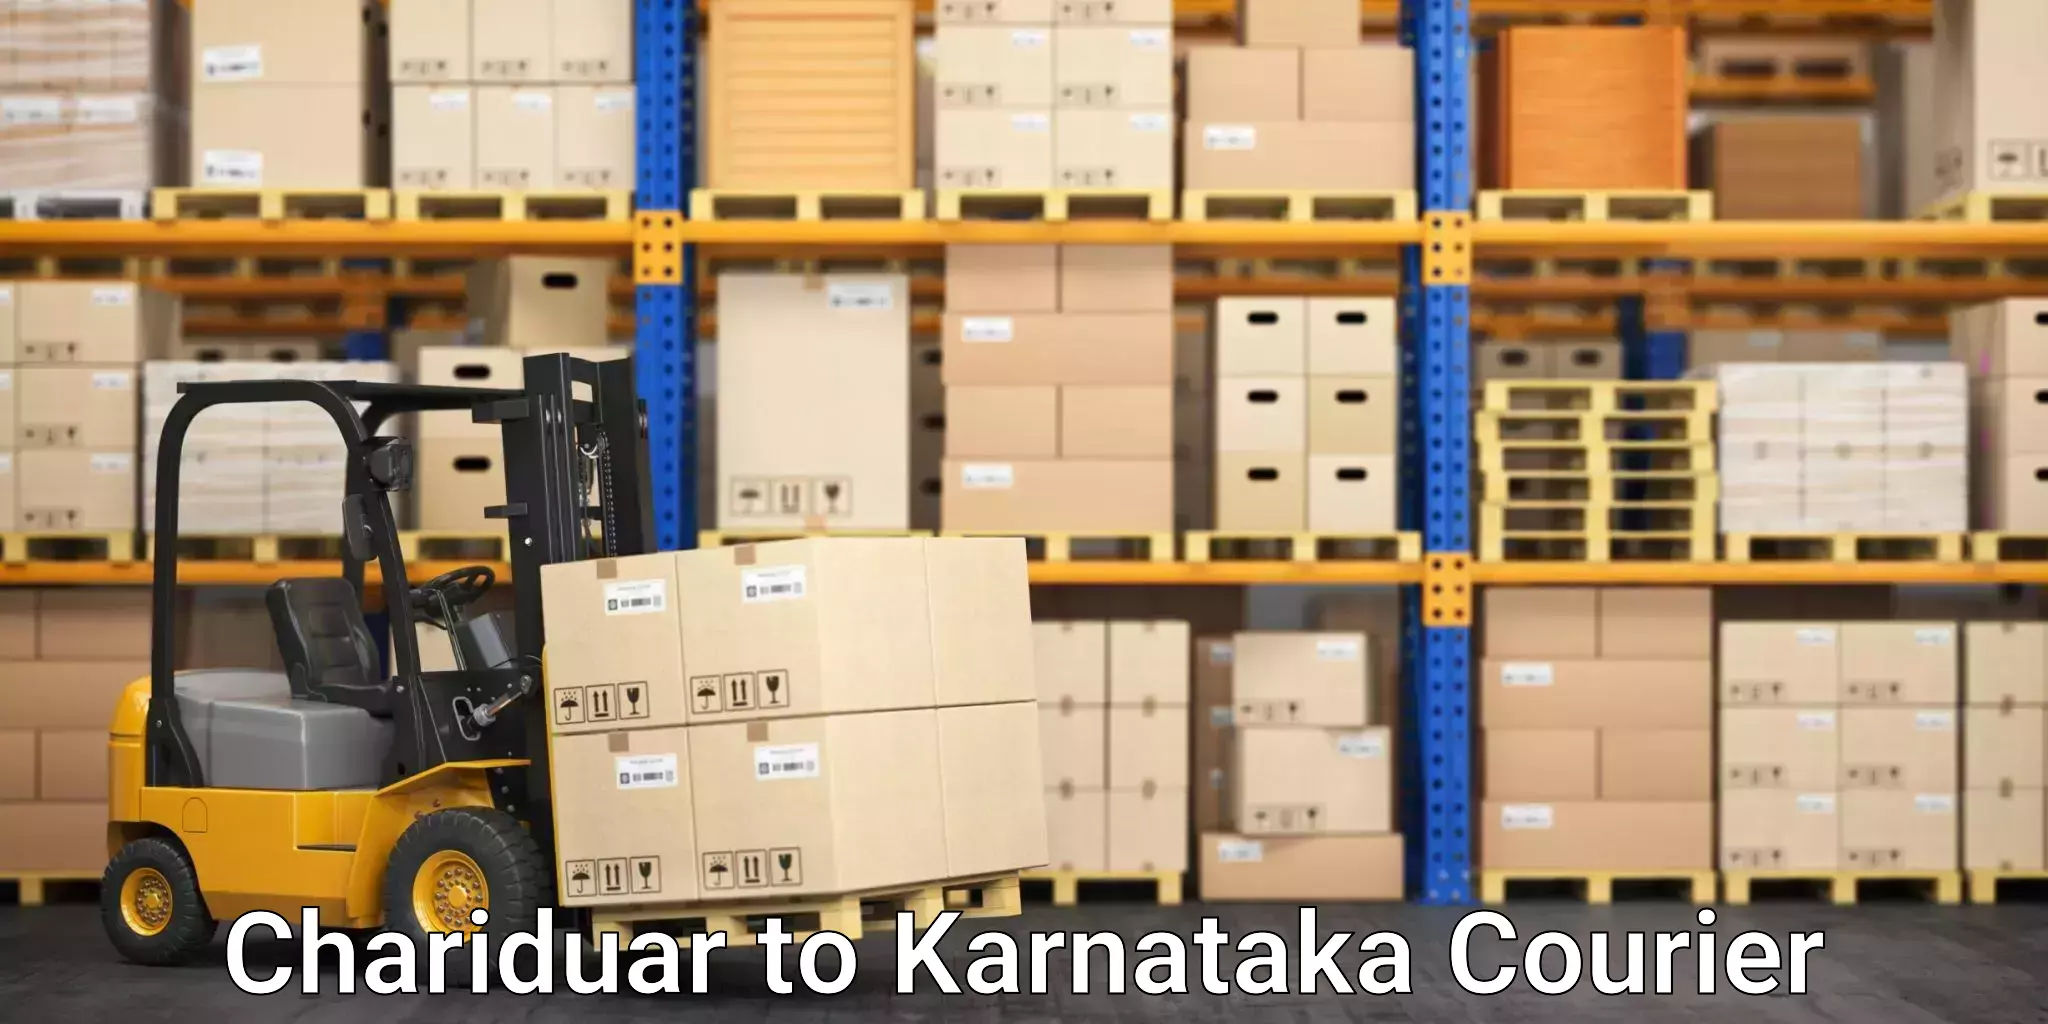 High-performance logistics Chariduar to Karnataka